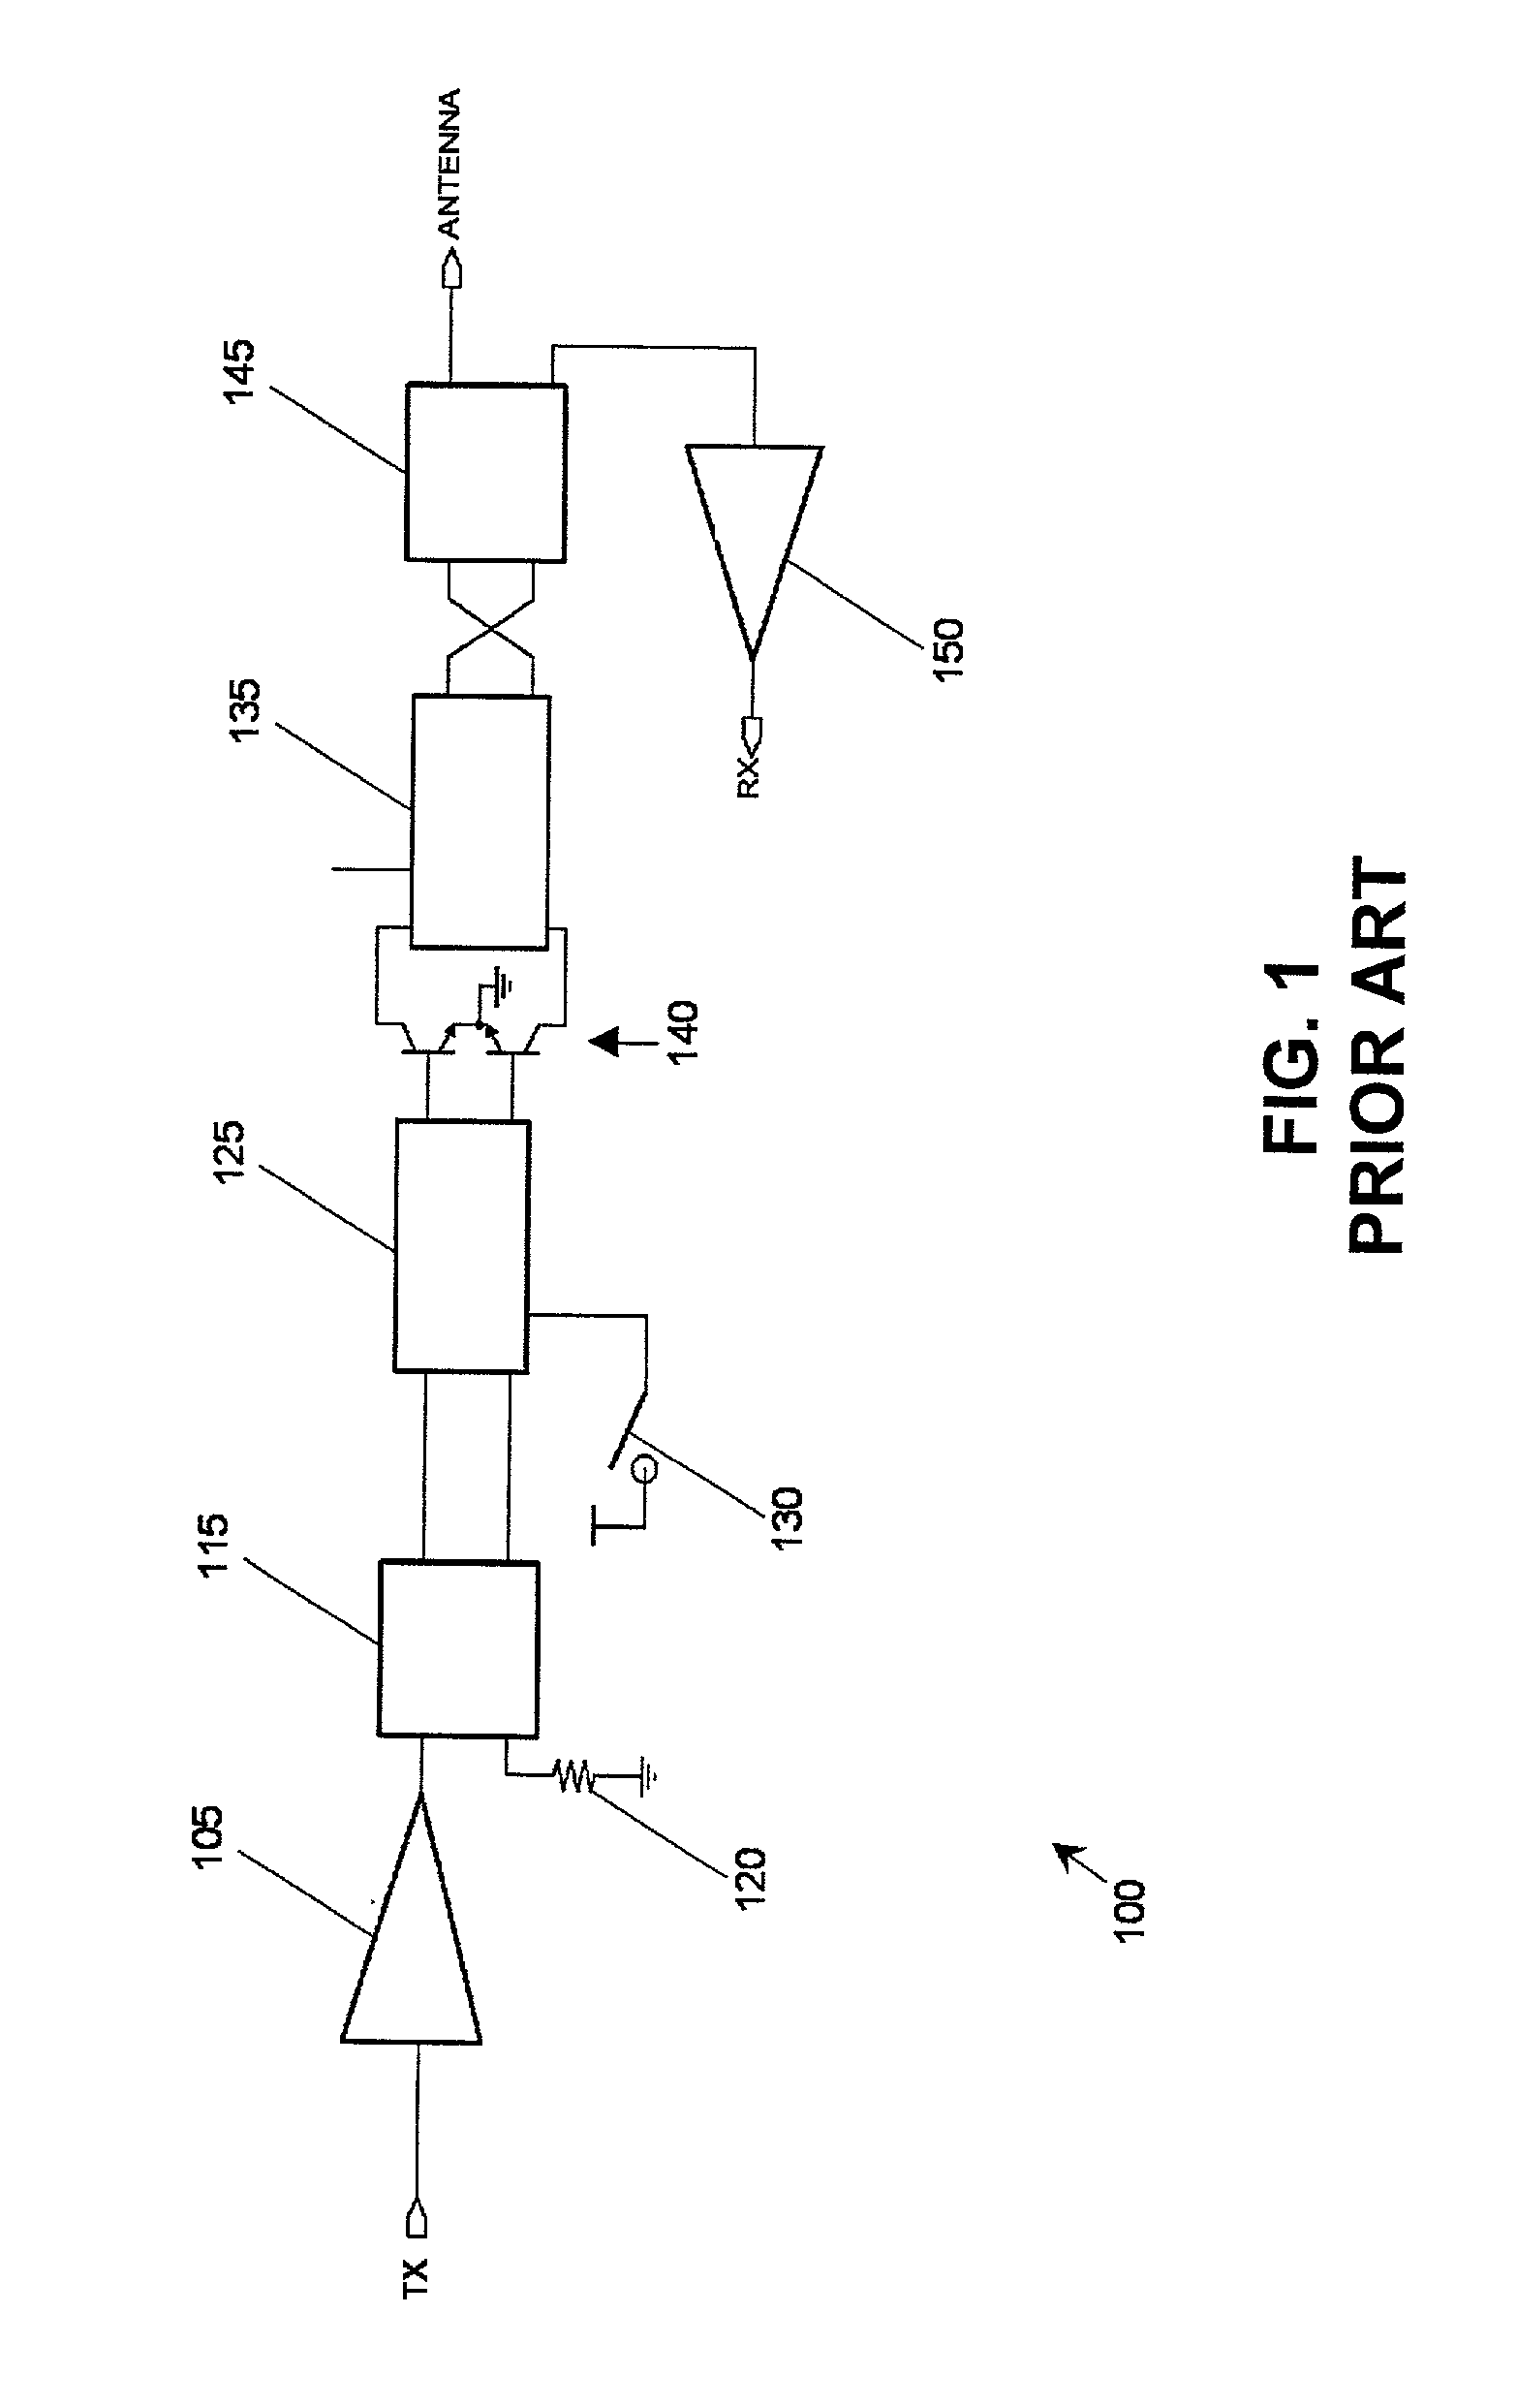 Transceiver circuit arrangement and method